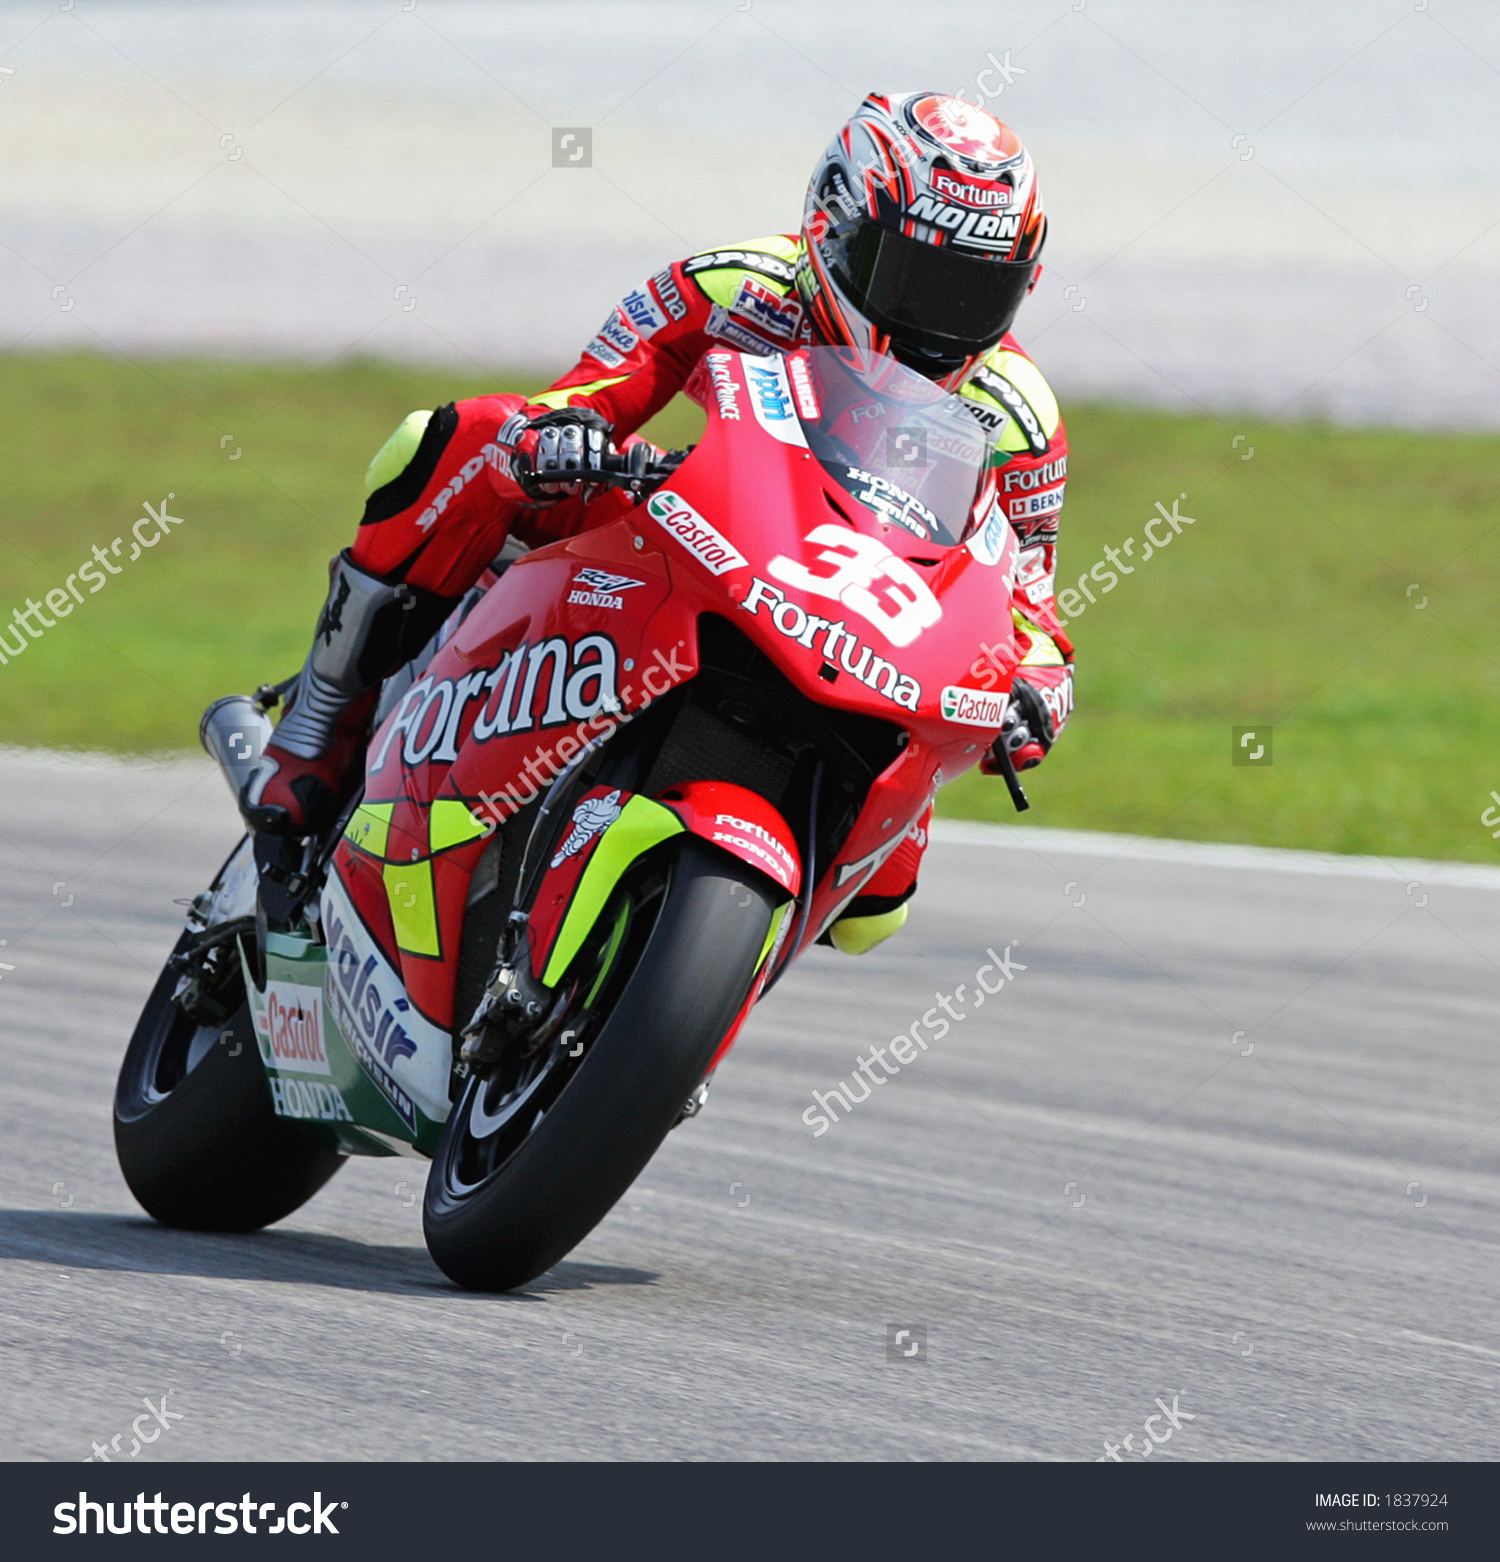 Italian Motogp Rider Marco Melandri Fortuna Stock Photo 1837924.